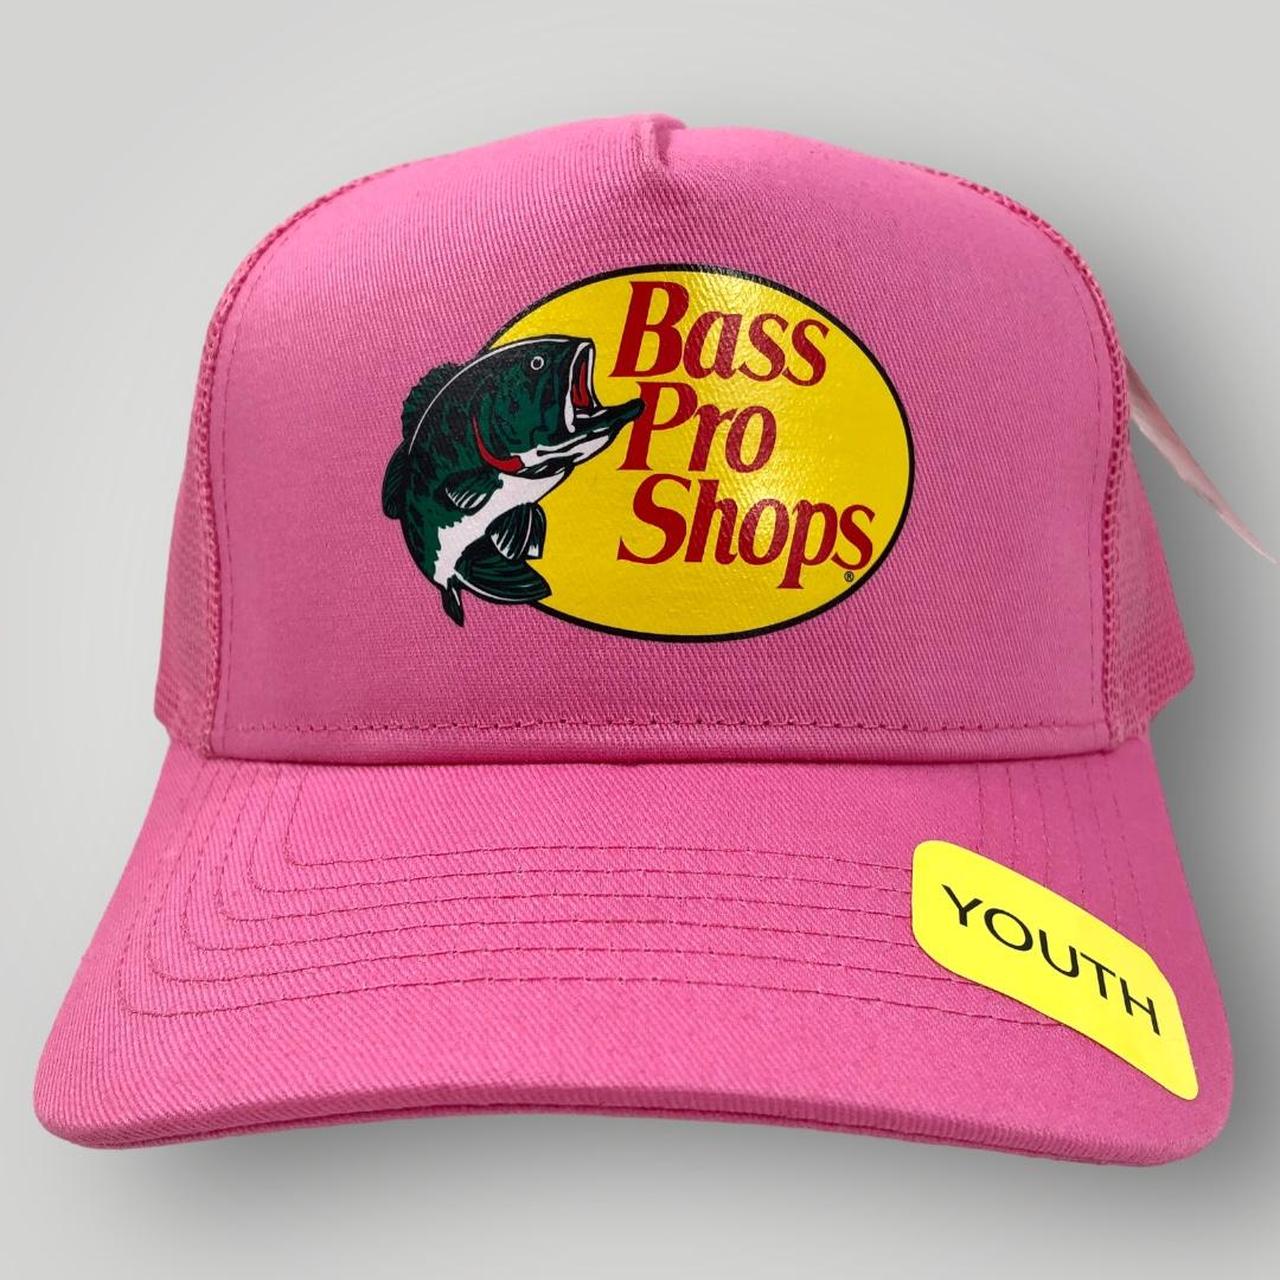 Bass Pro Shops Kids' Caps - Pink